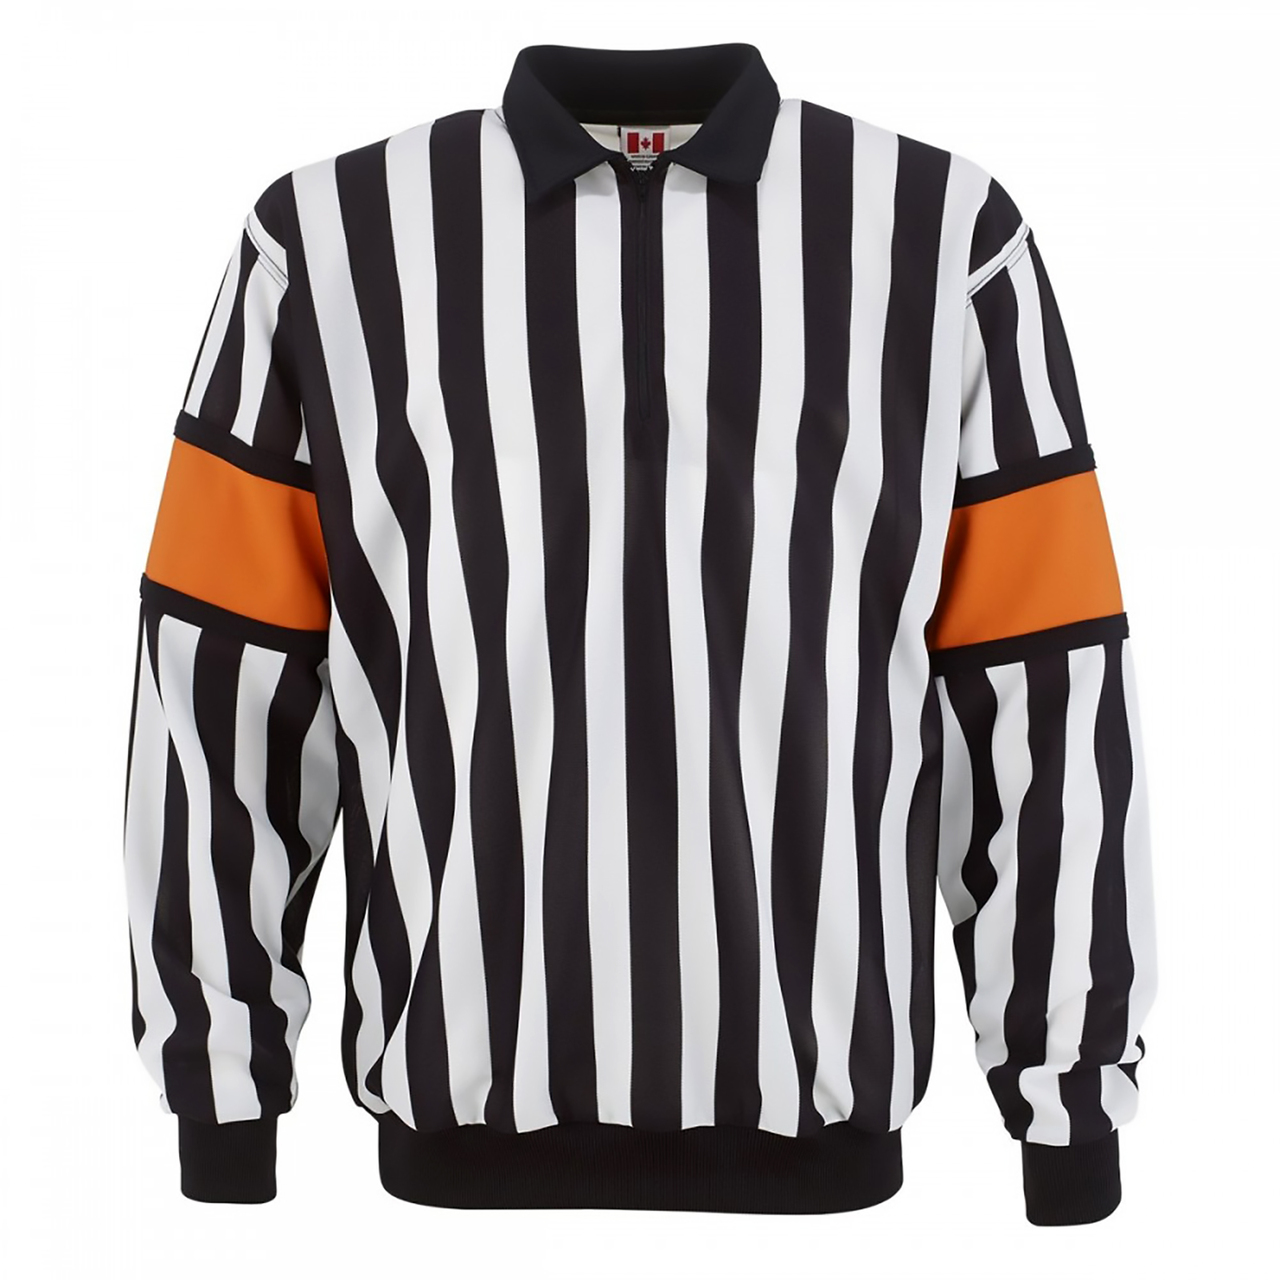 CCM Senior Hockey Referee Jersey Sewn-On Bands